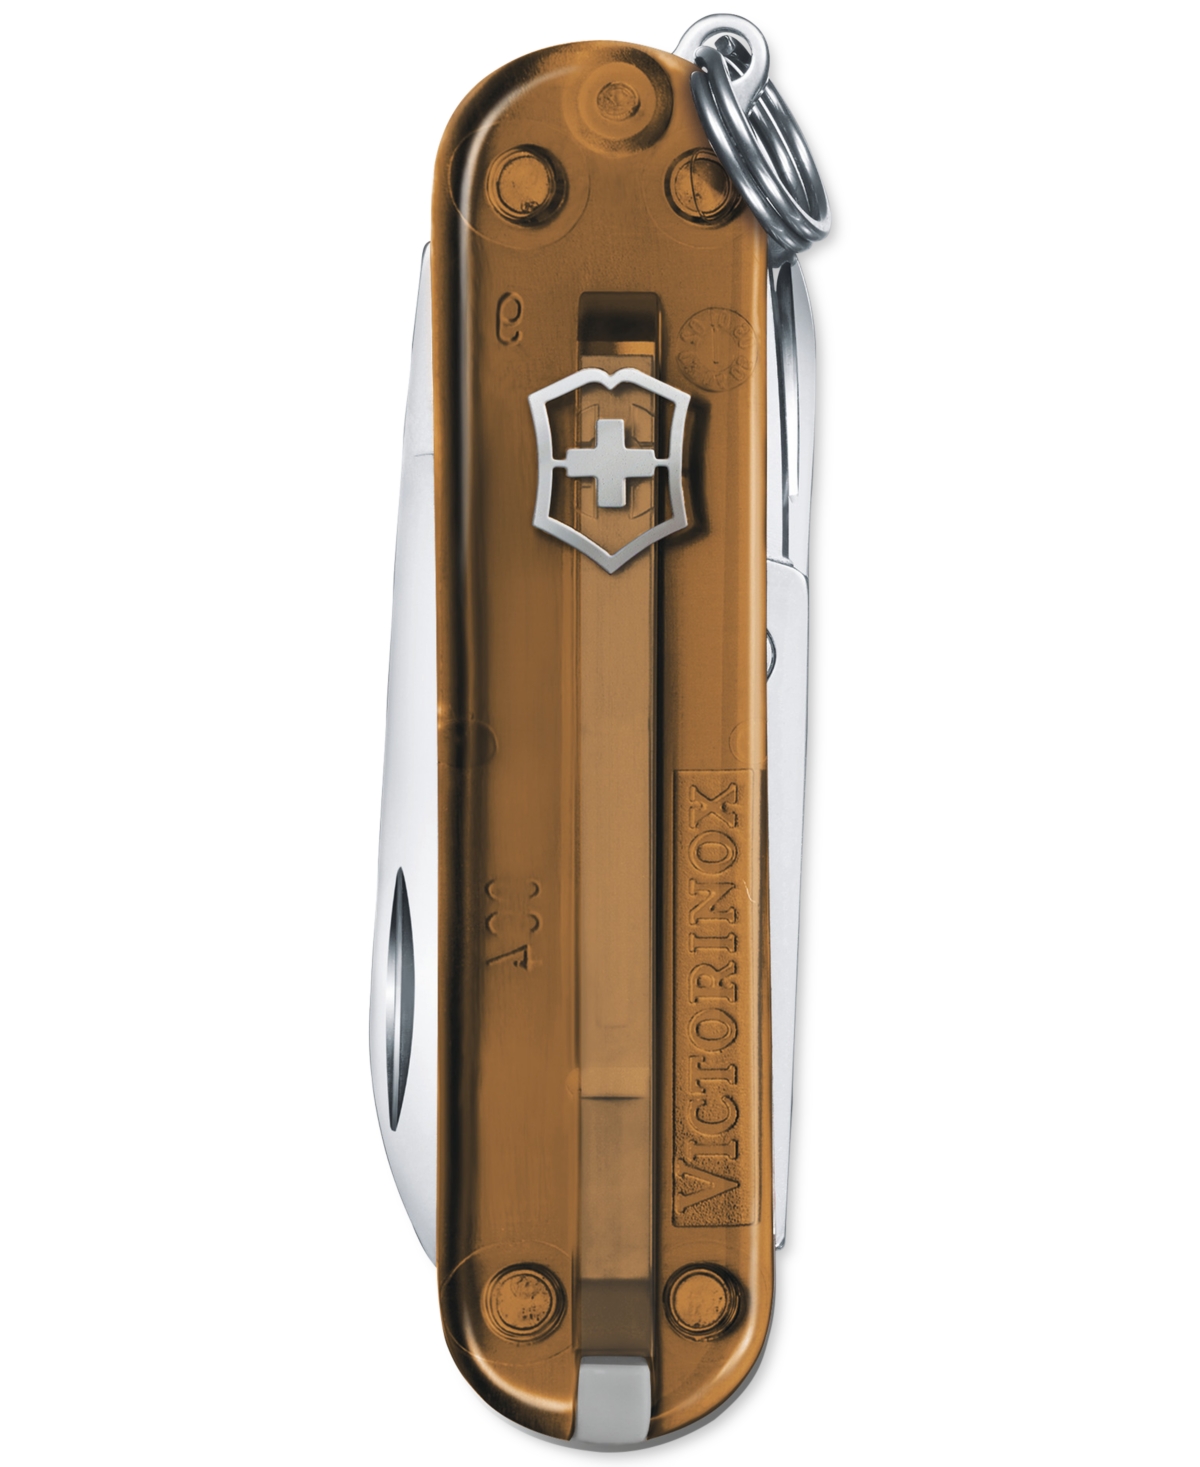 Shop Victorinox Swiss Army Classic Sd Pocketknife, Chocolate Fudge